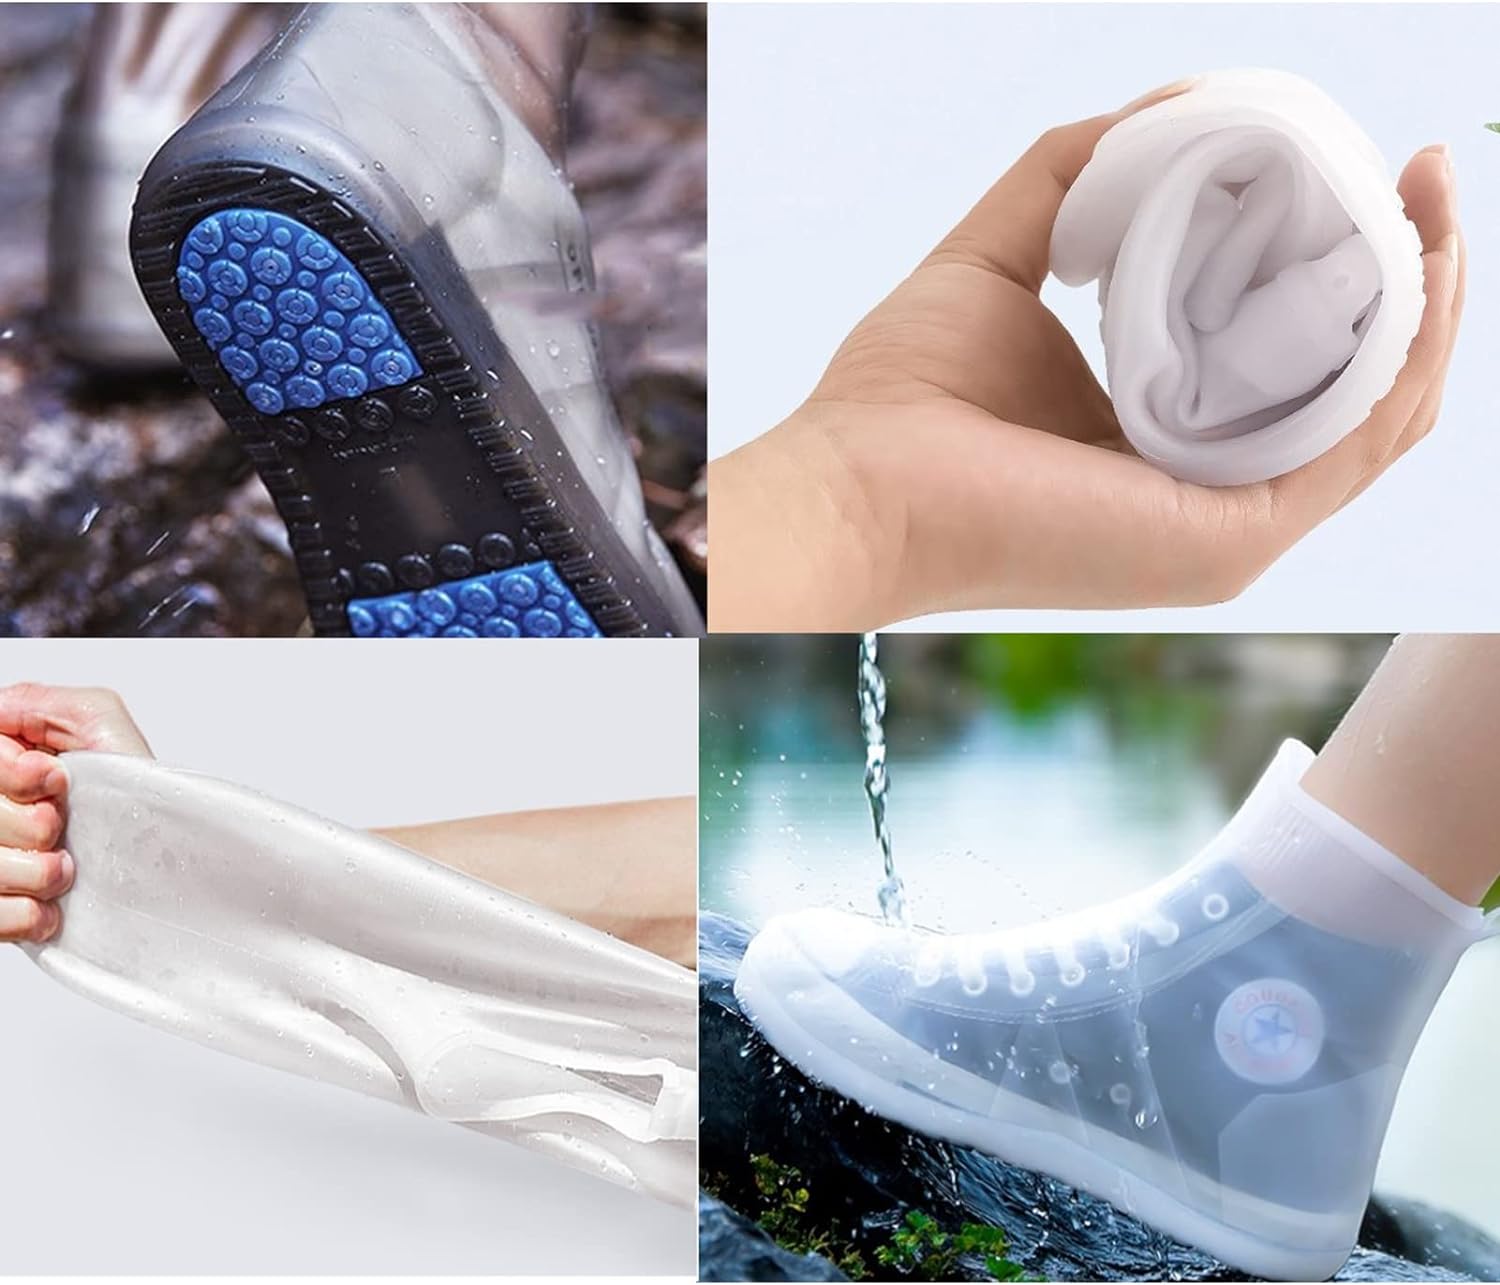 XXLarge 43-45 Waterproof Shoe Covers 1 Pair Silicone Non-Slip Overshoes Reusable Foldable Shoe Protector Rain Galosh Boot Rain Snow Outdoor